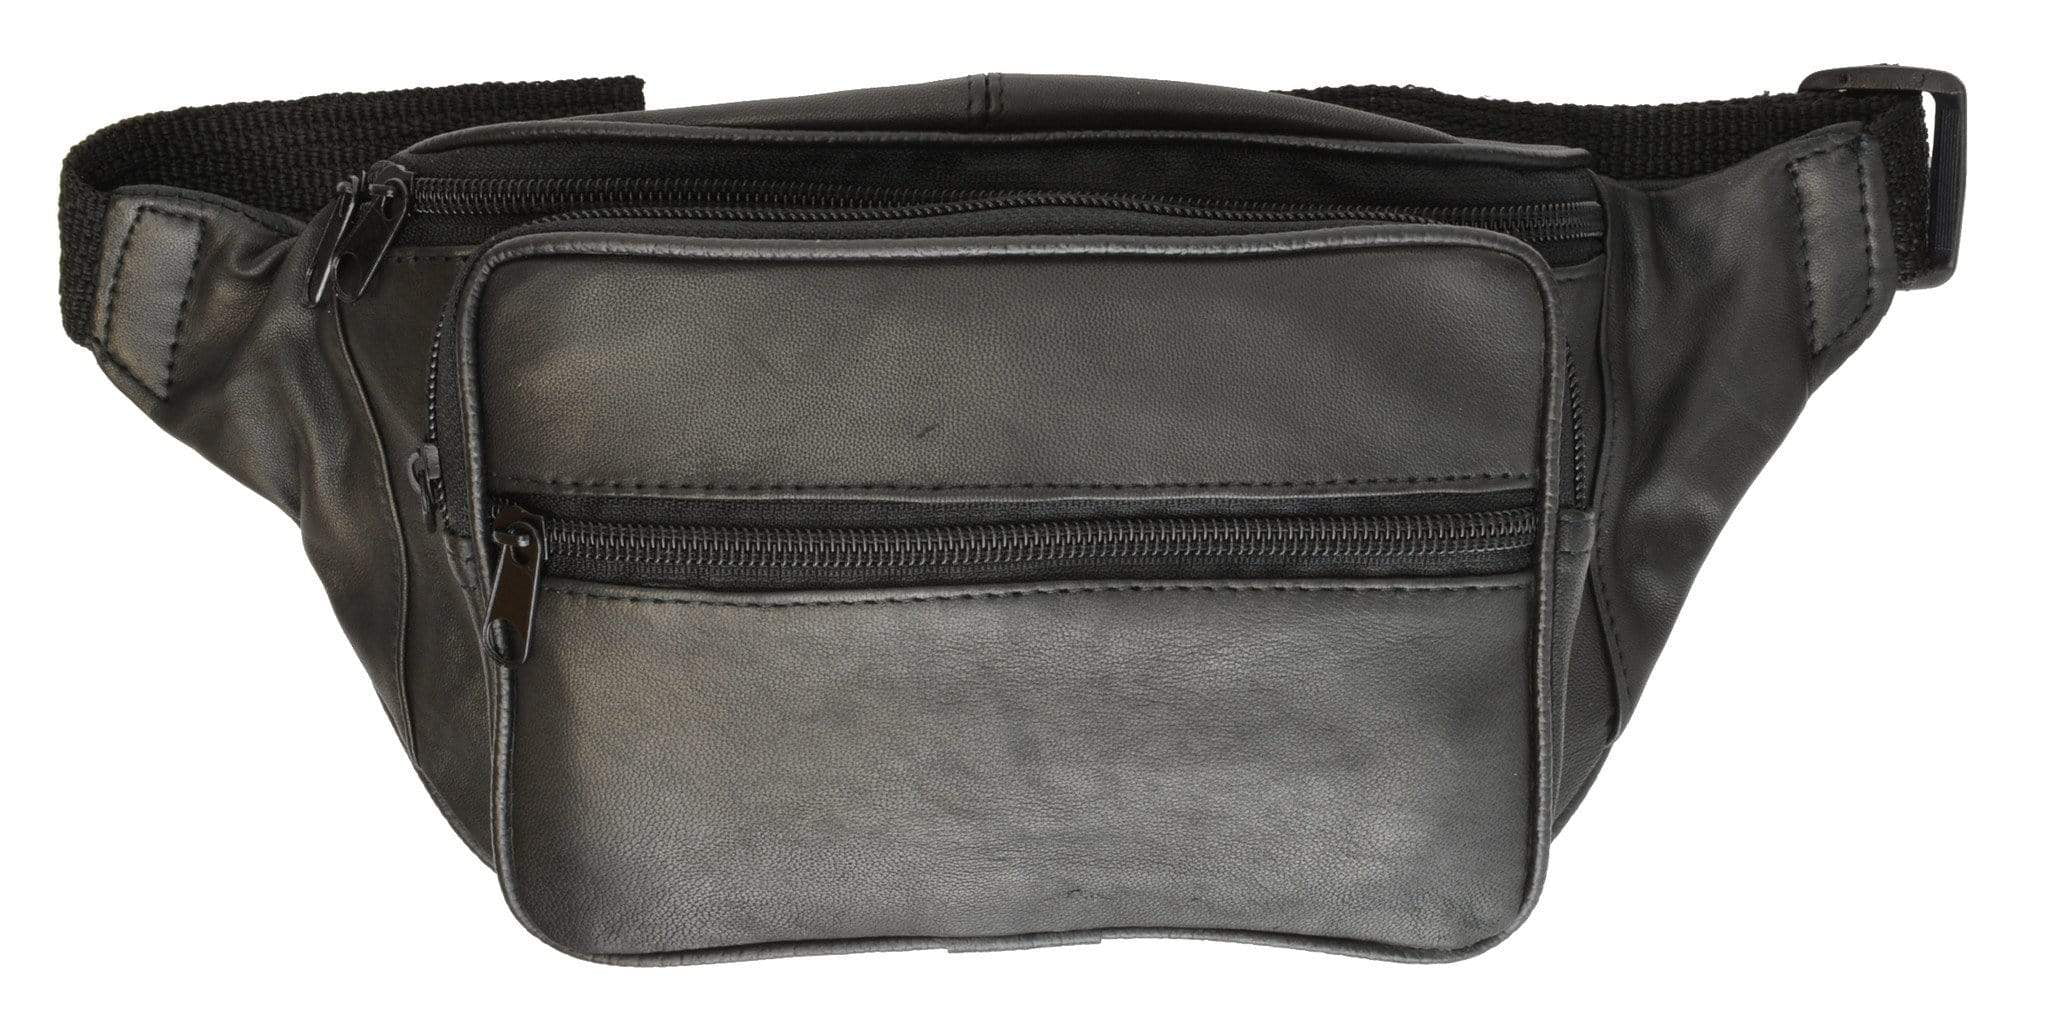 New Black Leather Waist Fanny Pack Belt Bag Pouch Travel Hip Purse Men Women 005 